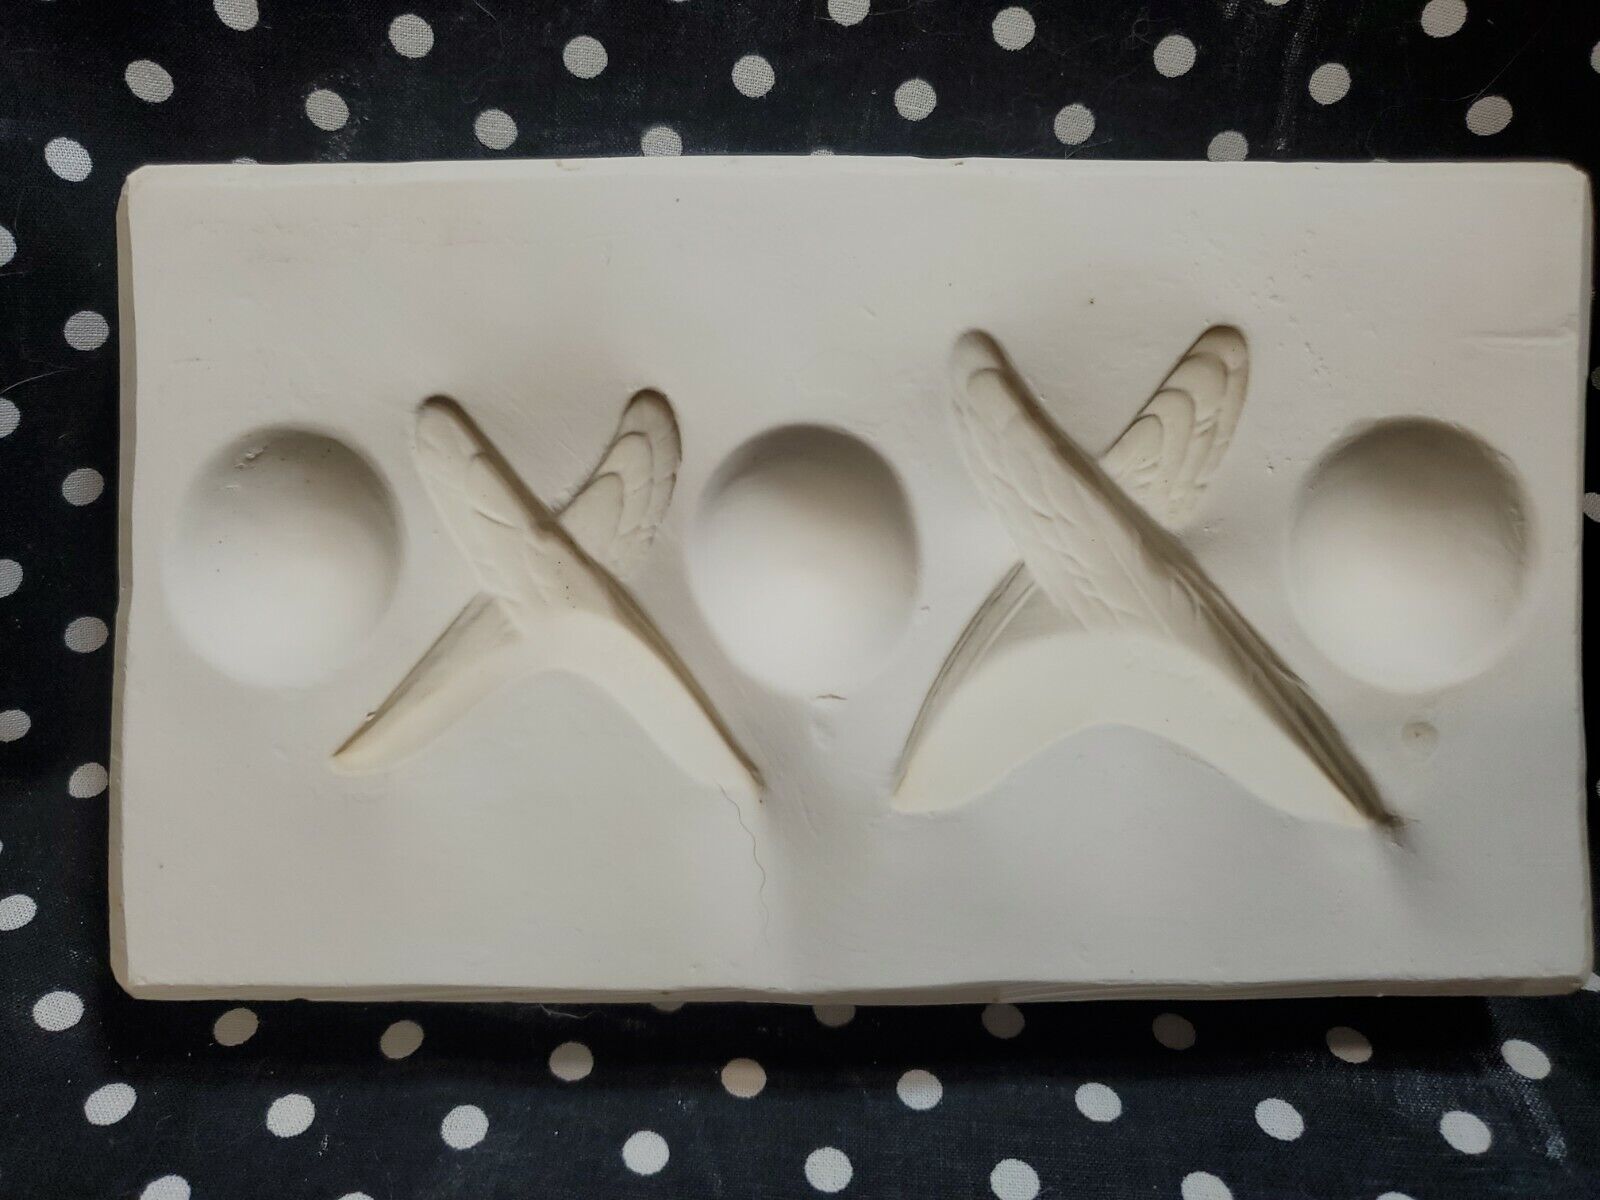 Holland Molds H 1487 (?) Ceramic Slip Casting Mold